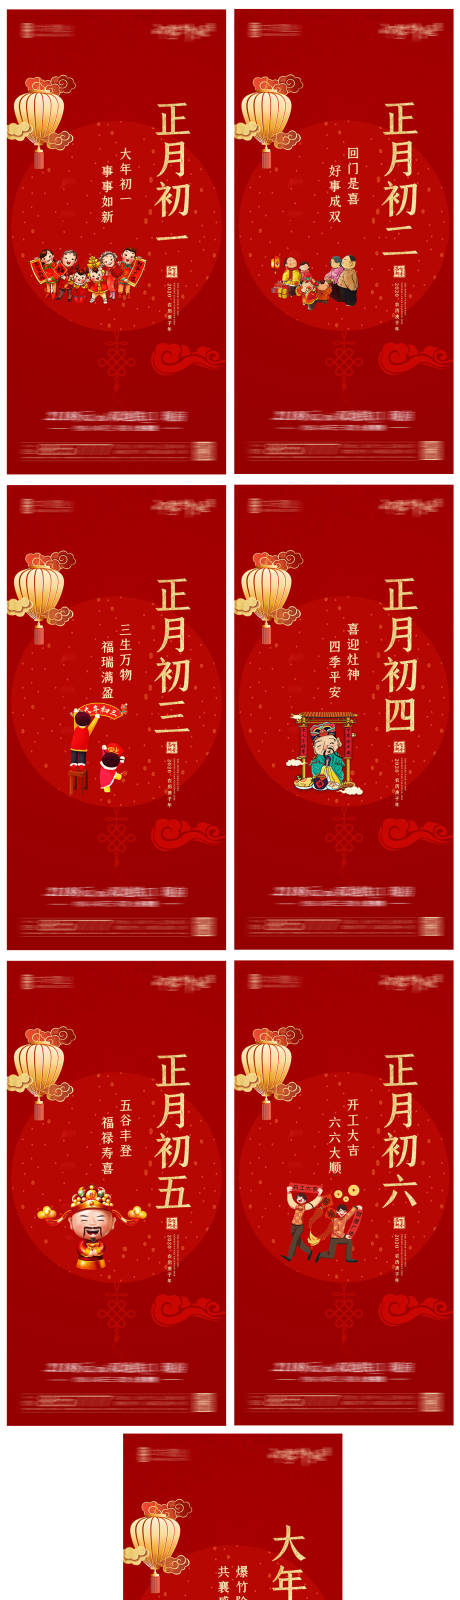 春节喜庆红色微信海报-源文件【享设计】